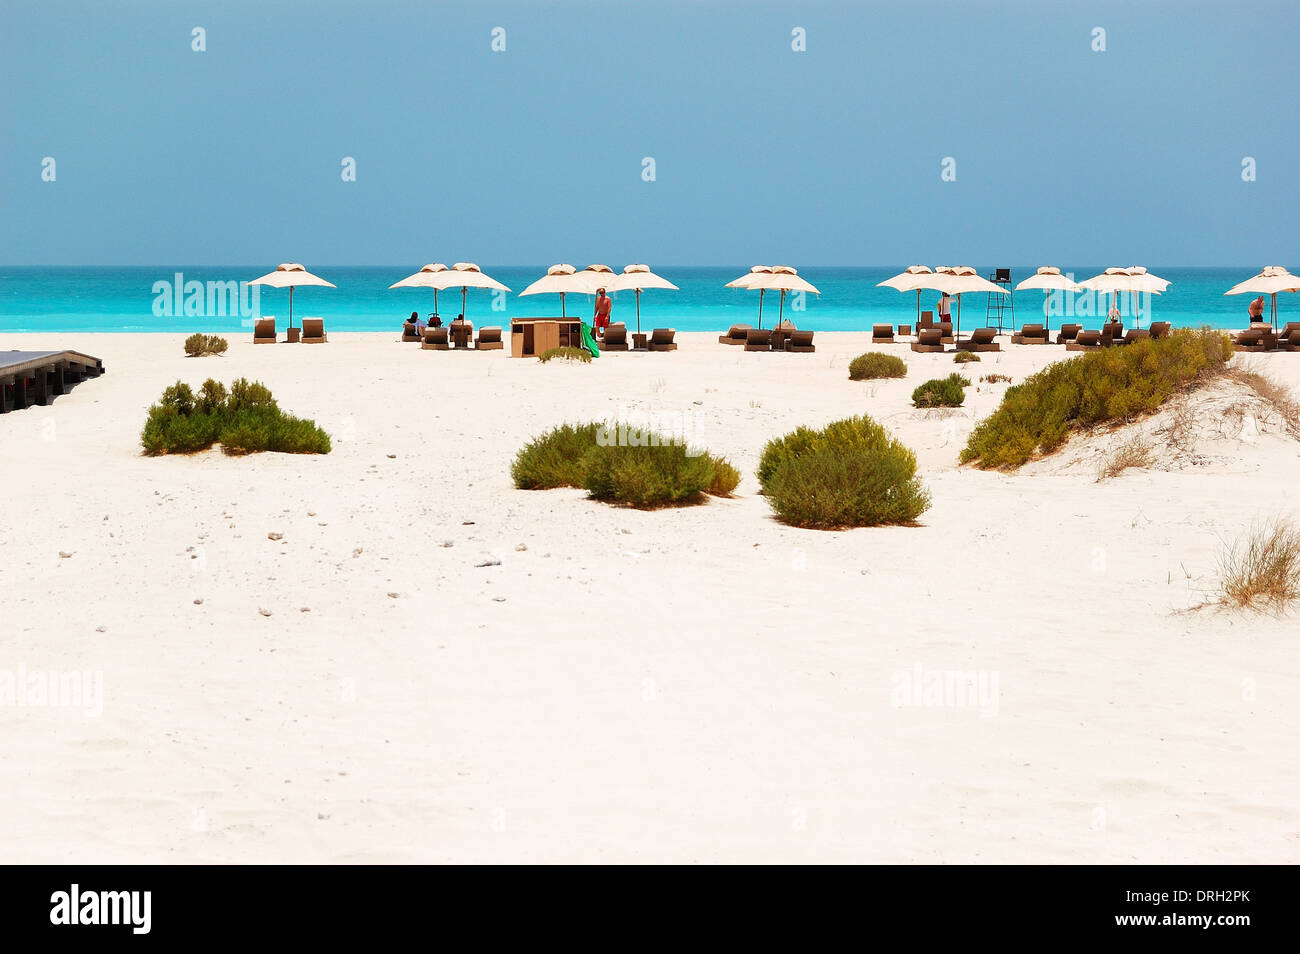 Sunbeds and umbrellas at the Beach of luxury hotel, Abu Dhabi, UAE Stock Photo